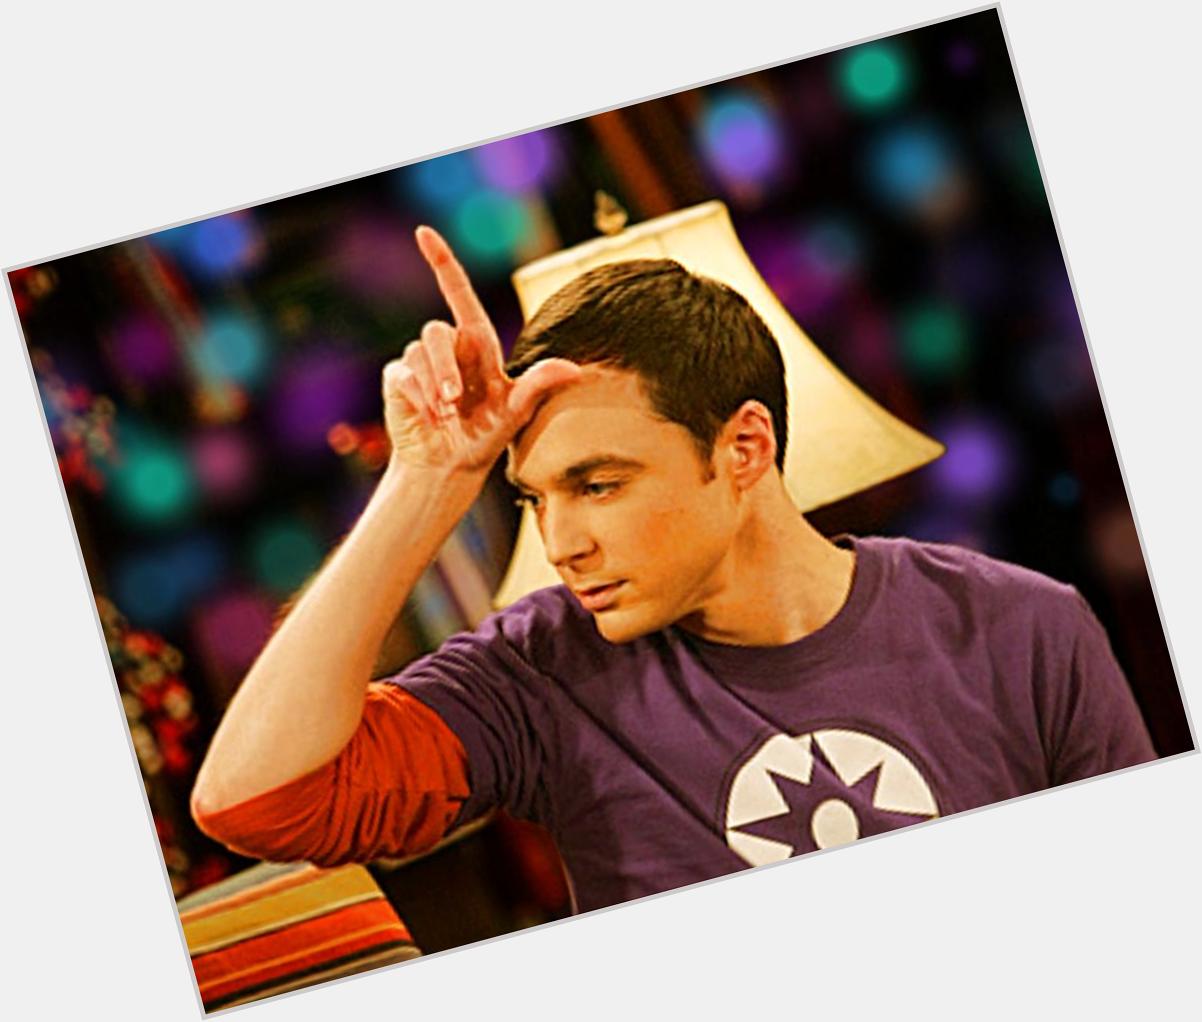 Happy birthday to Sheldon Cooper, aka Jim Parsons!
We wish him good luck and health in his future! 